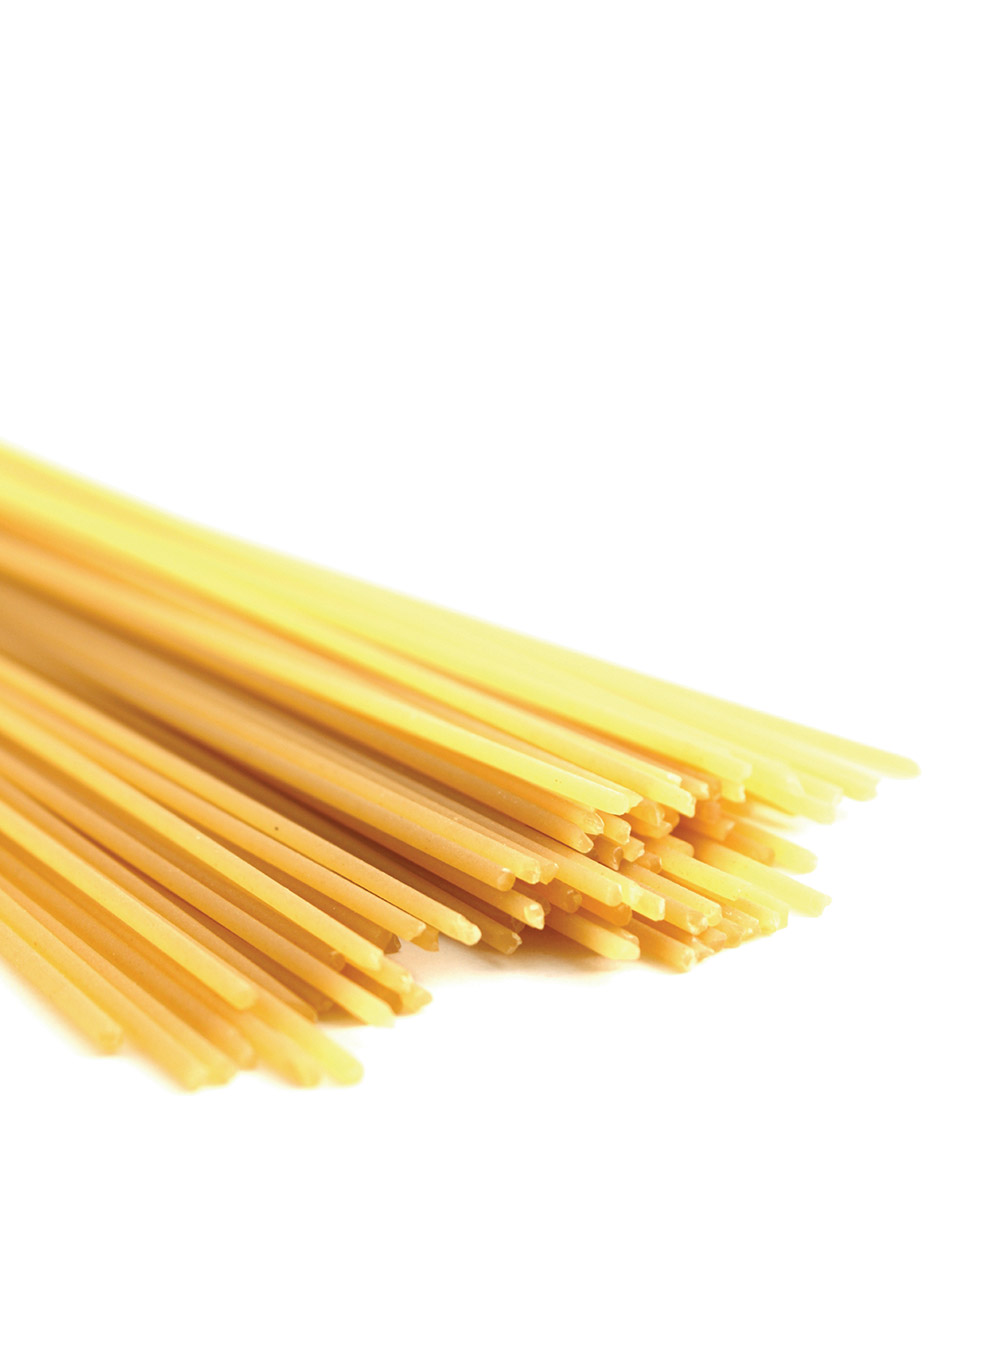 Spaghettini carbonara version santé | ricardo